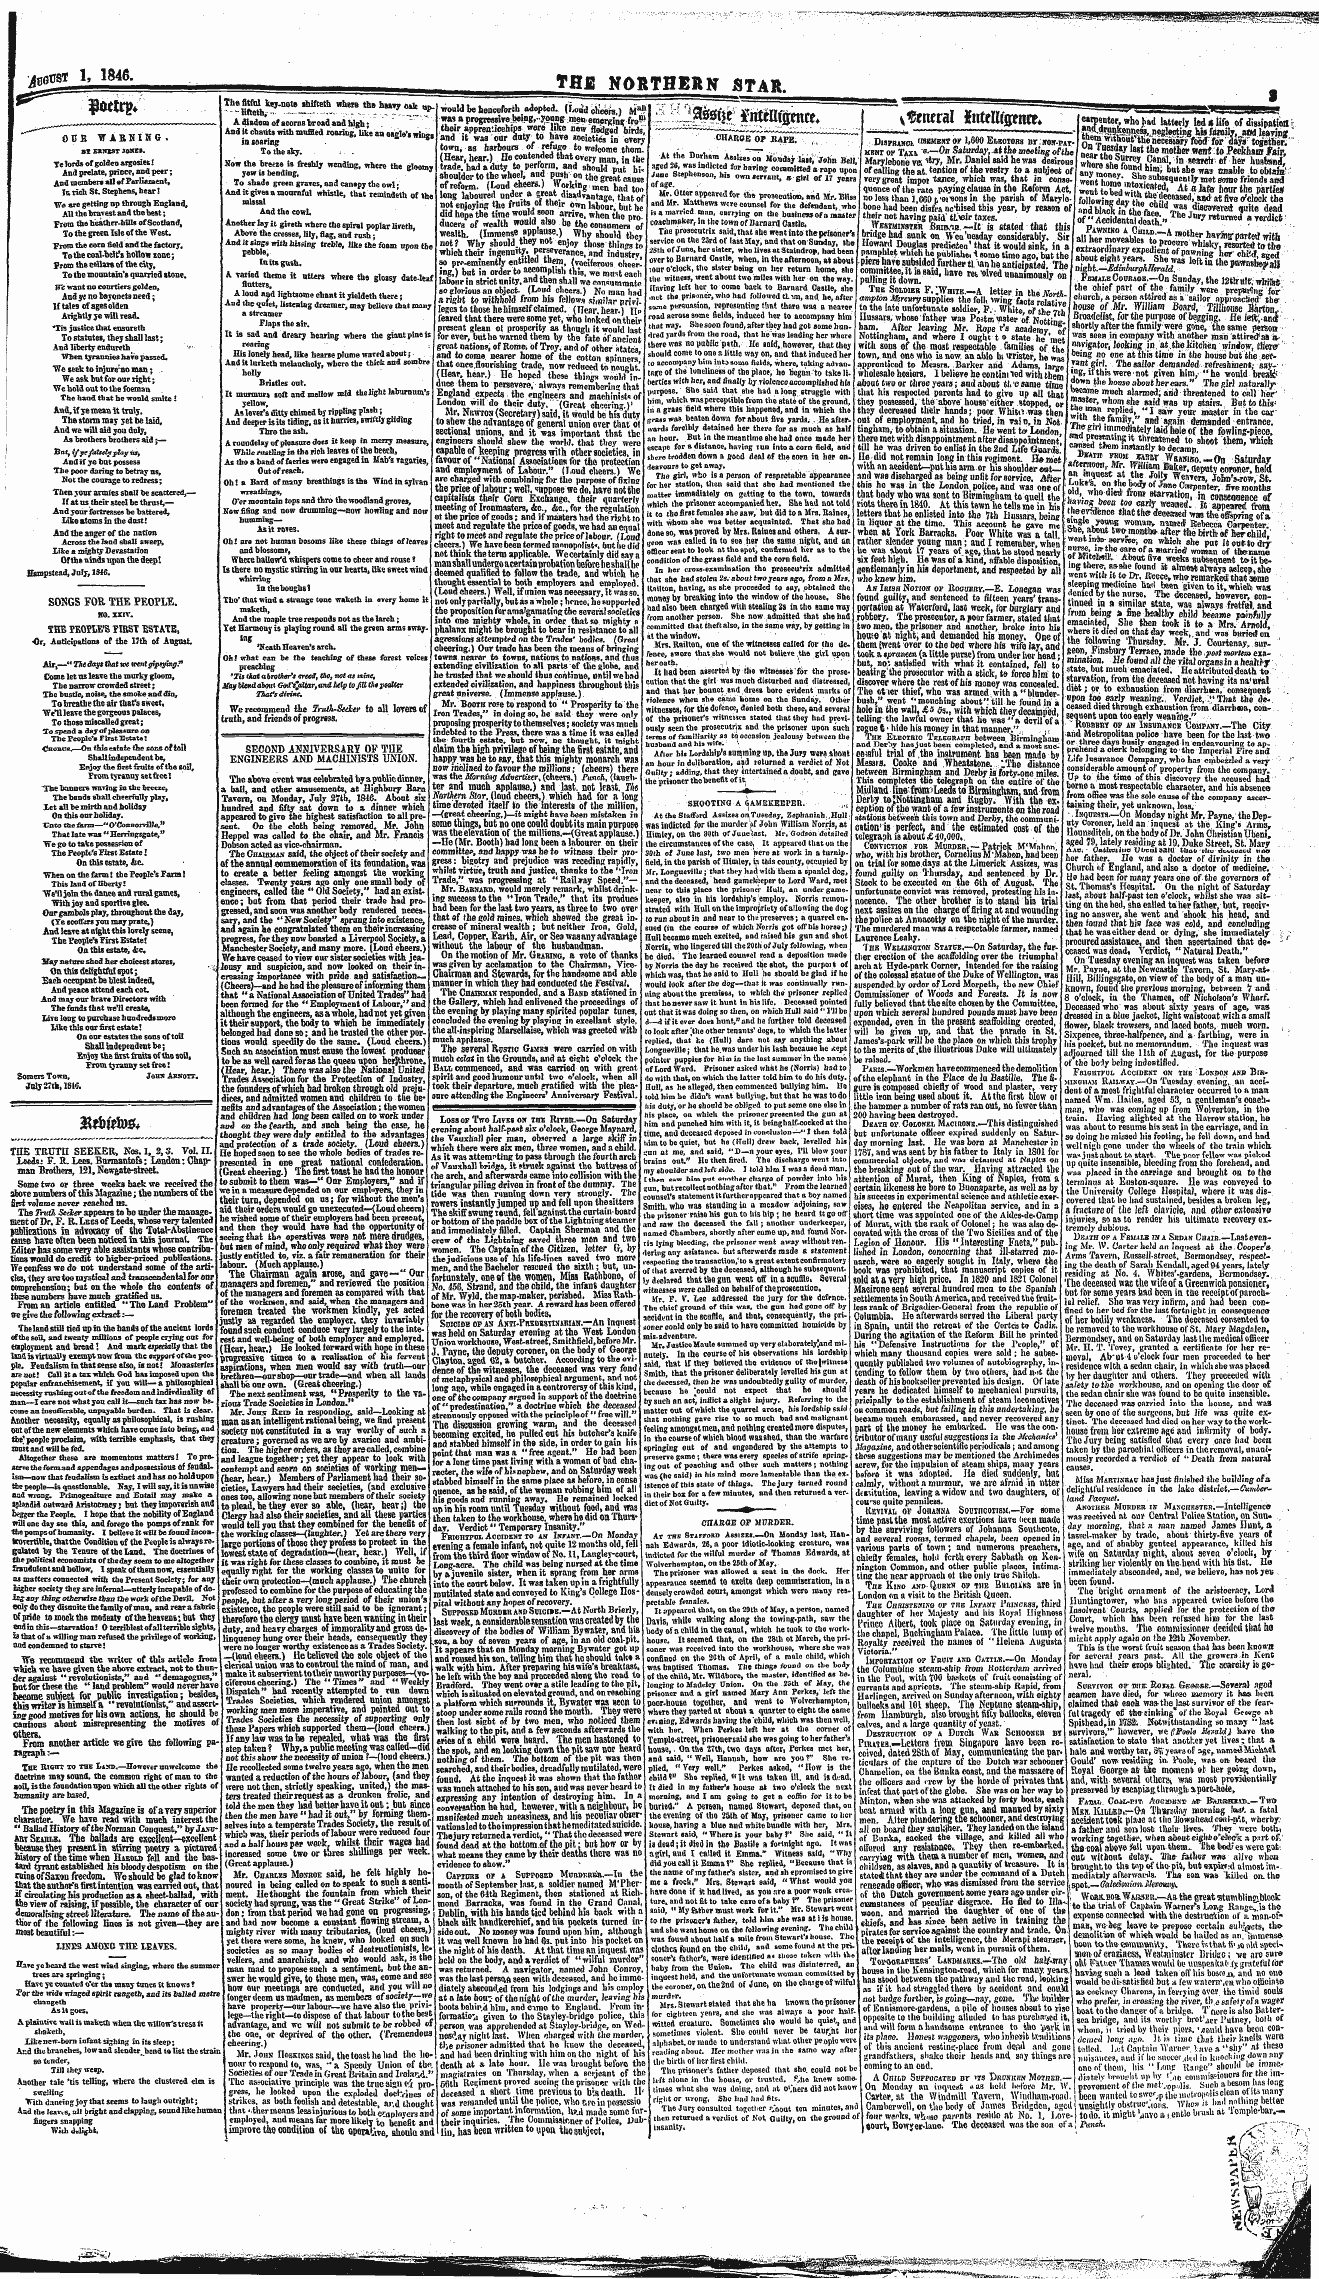 Northern Star (1837-1852): jS F Y, 2nd edition - - .<R;*""~ ^Mm- ''-A7 ; - '''V7j4